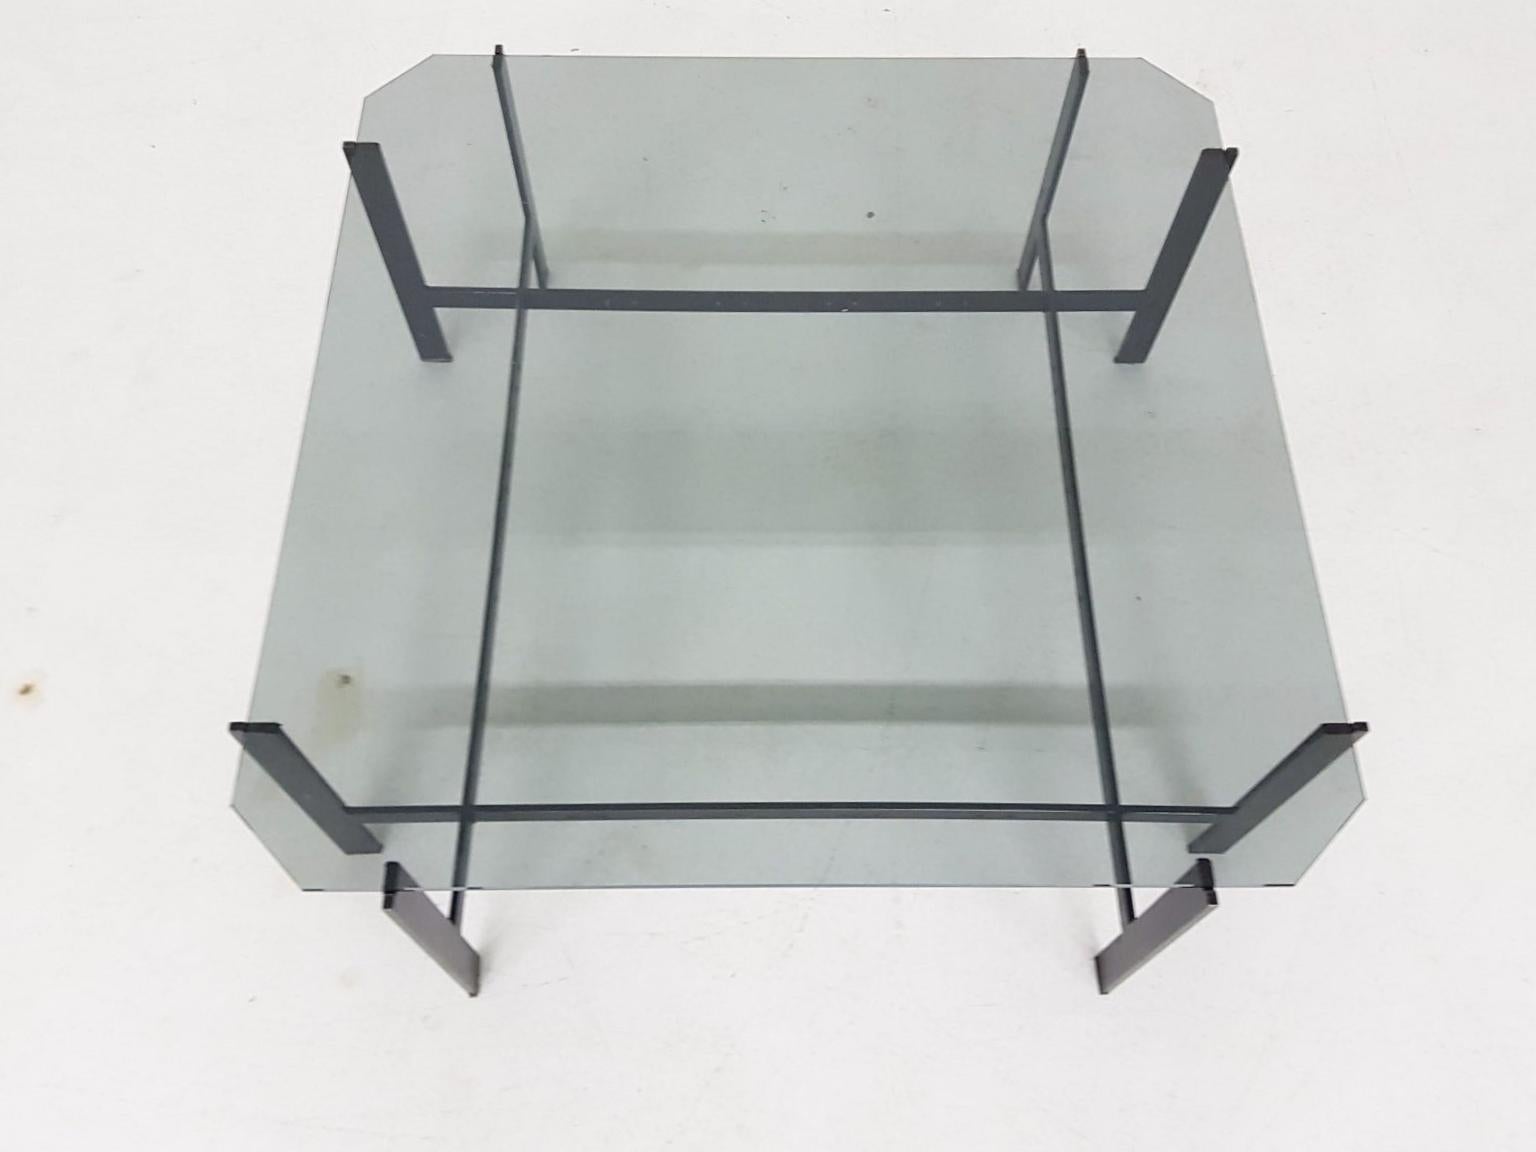 20th Century Minimalistic Geometric Mid-Century Modern Glass and Steel Coffee Table, 1960